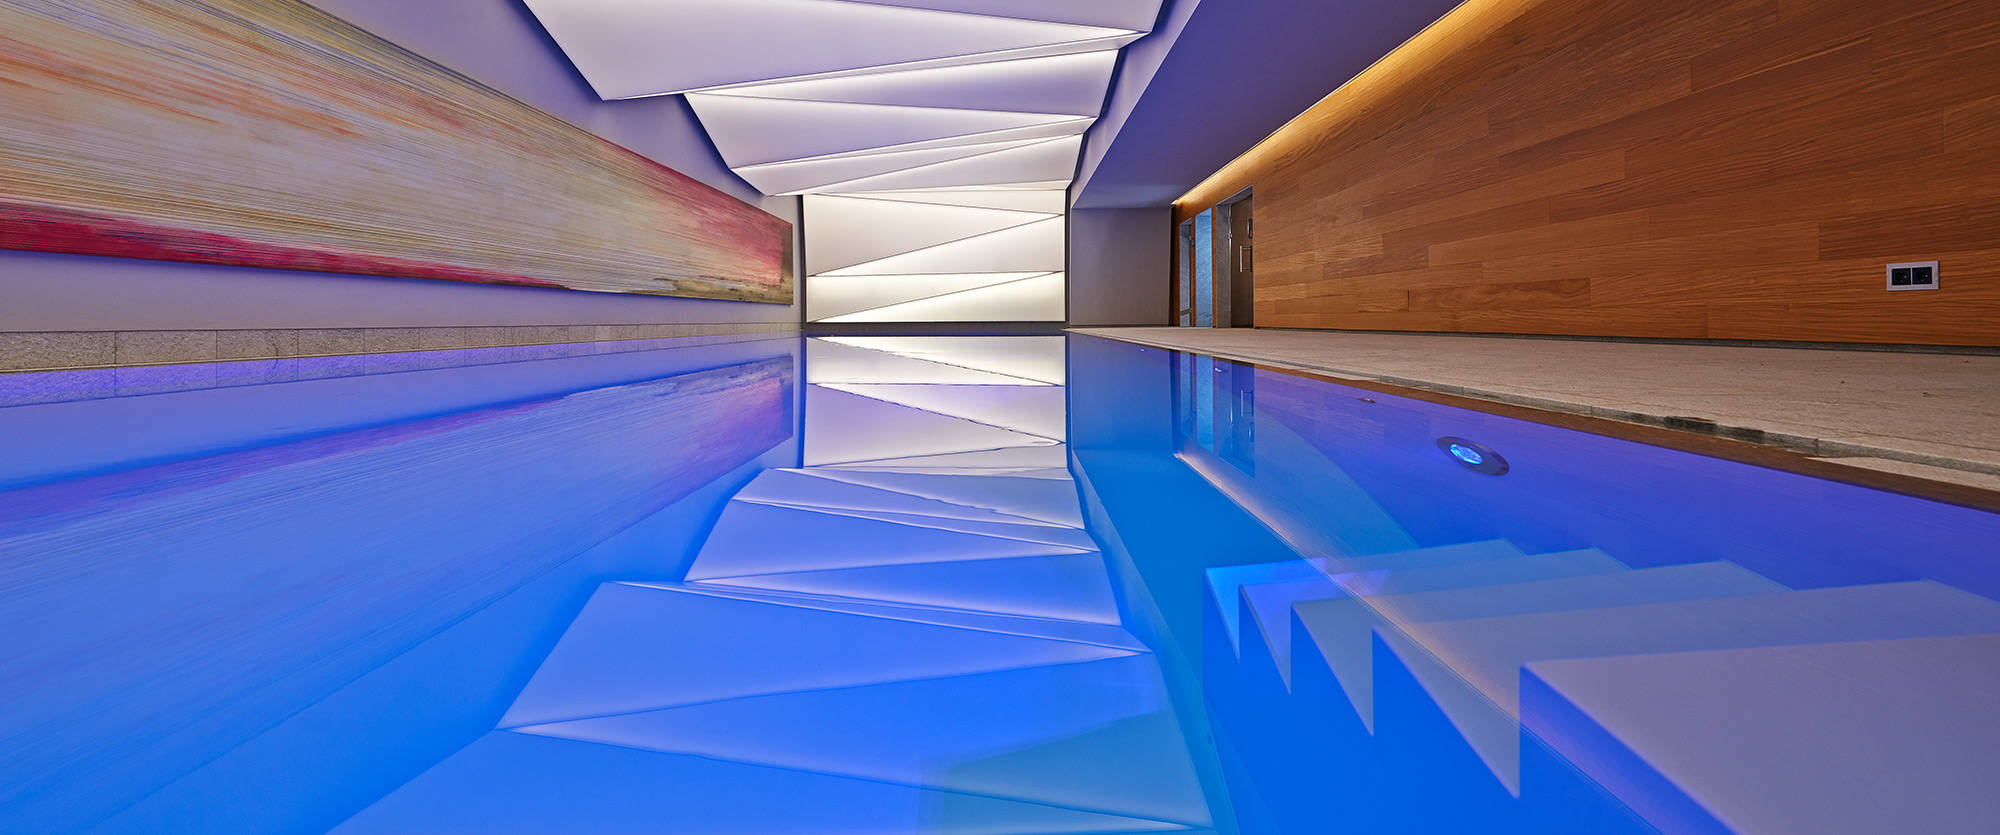 Indoor pool Impressively unfurled with illuminated ceiling